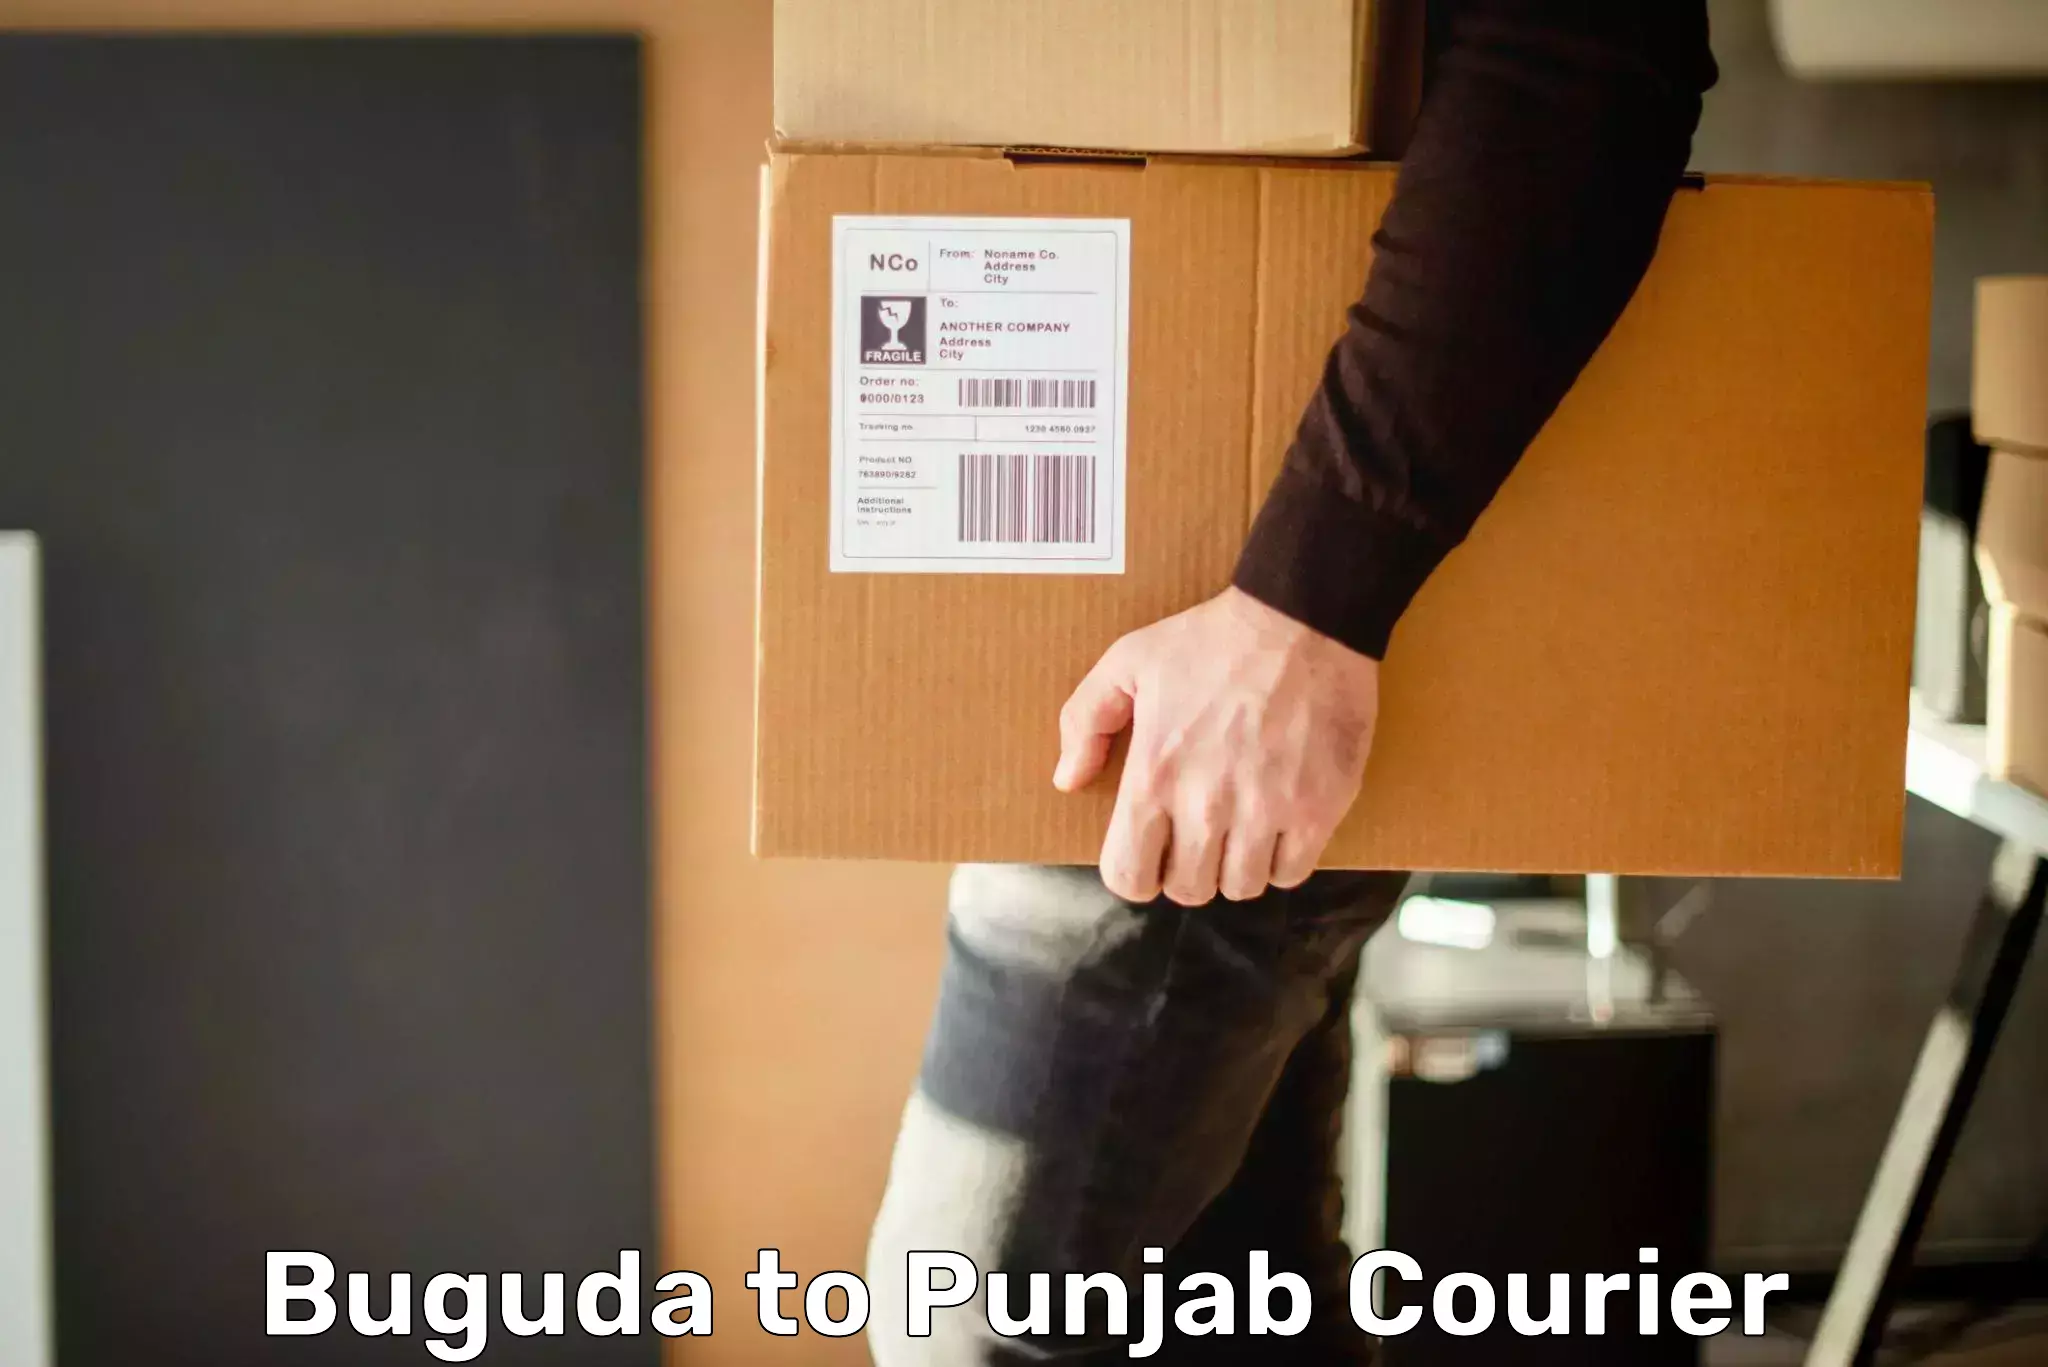 Doorstep delivery service Buguda to Punjab